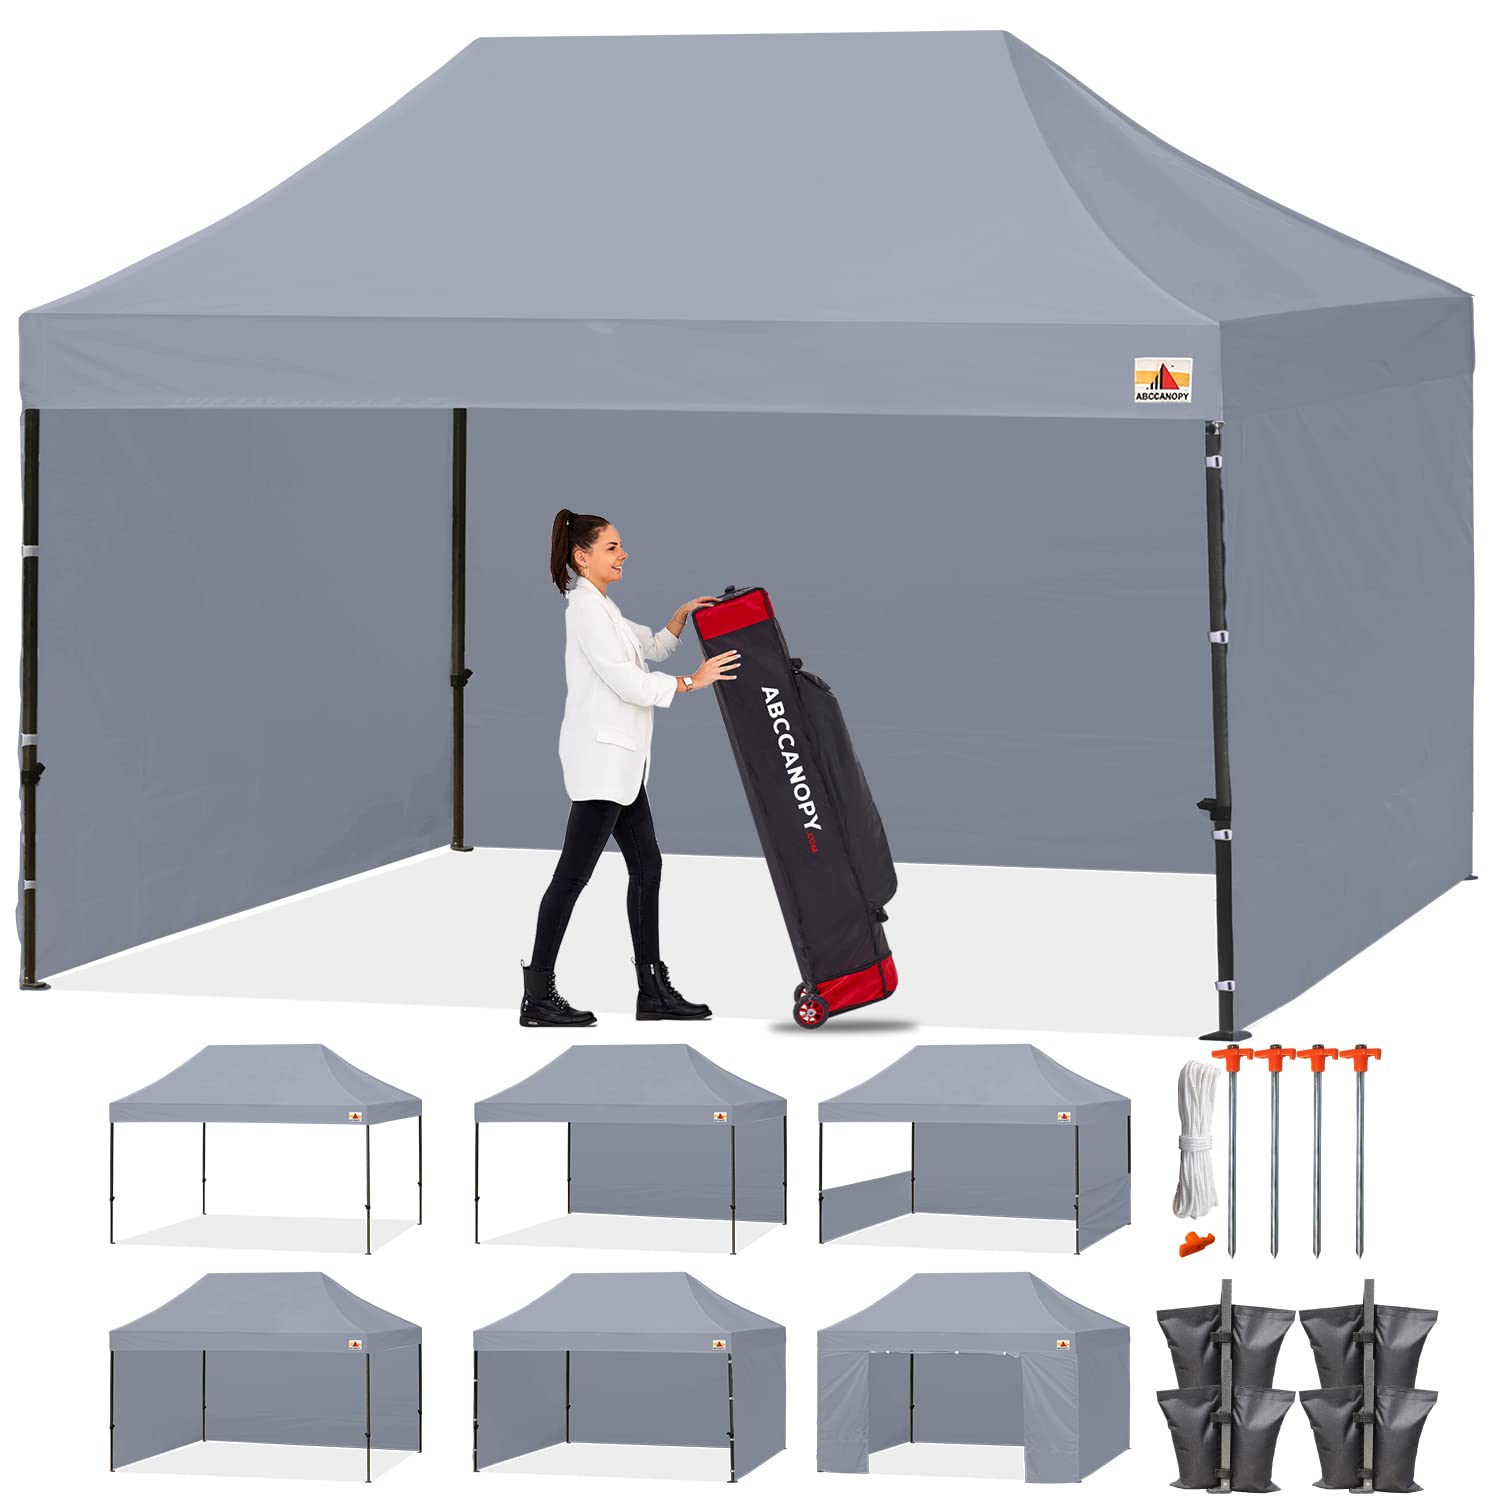 Abccanopy Heavy Duty Ez Pop Up Canopy Tent With Sidewalls 10X15, Gray